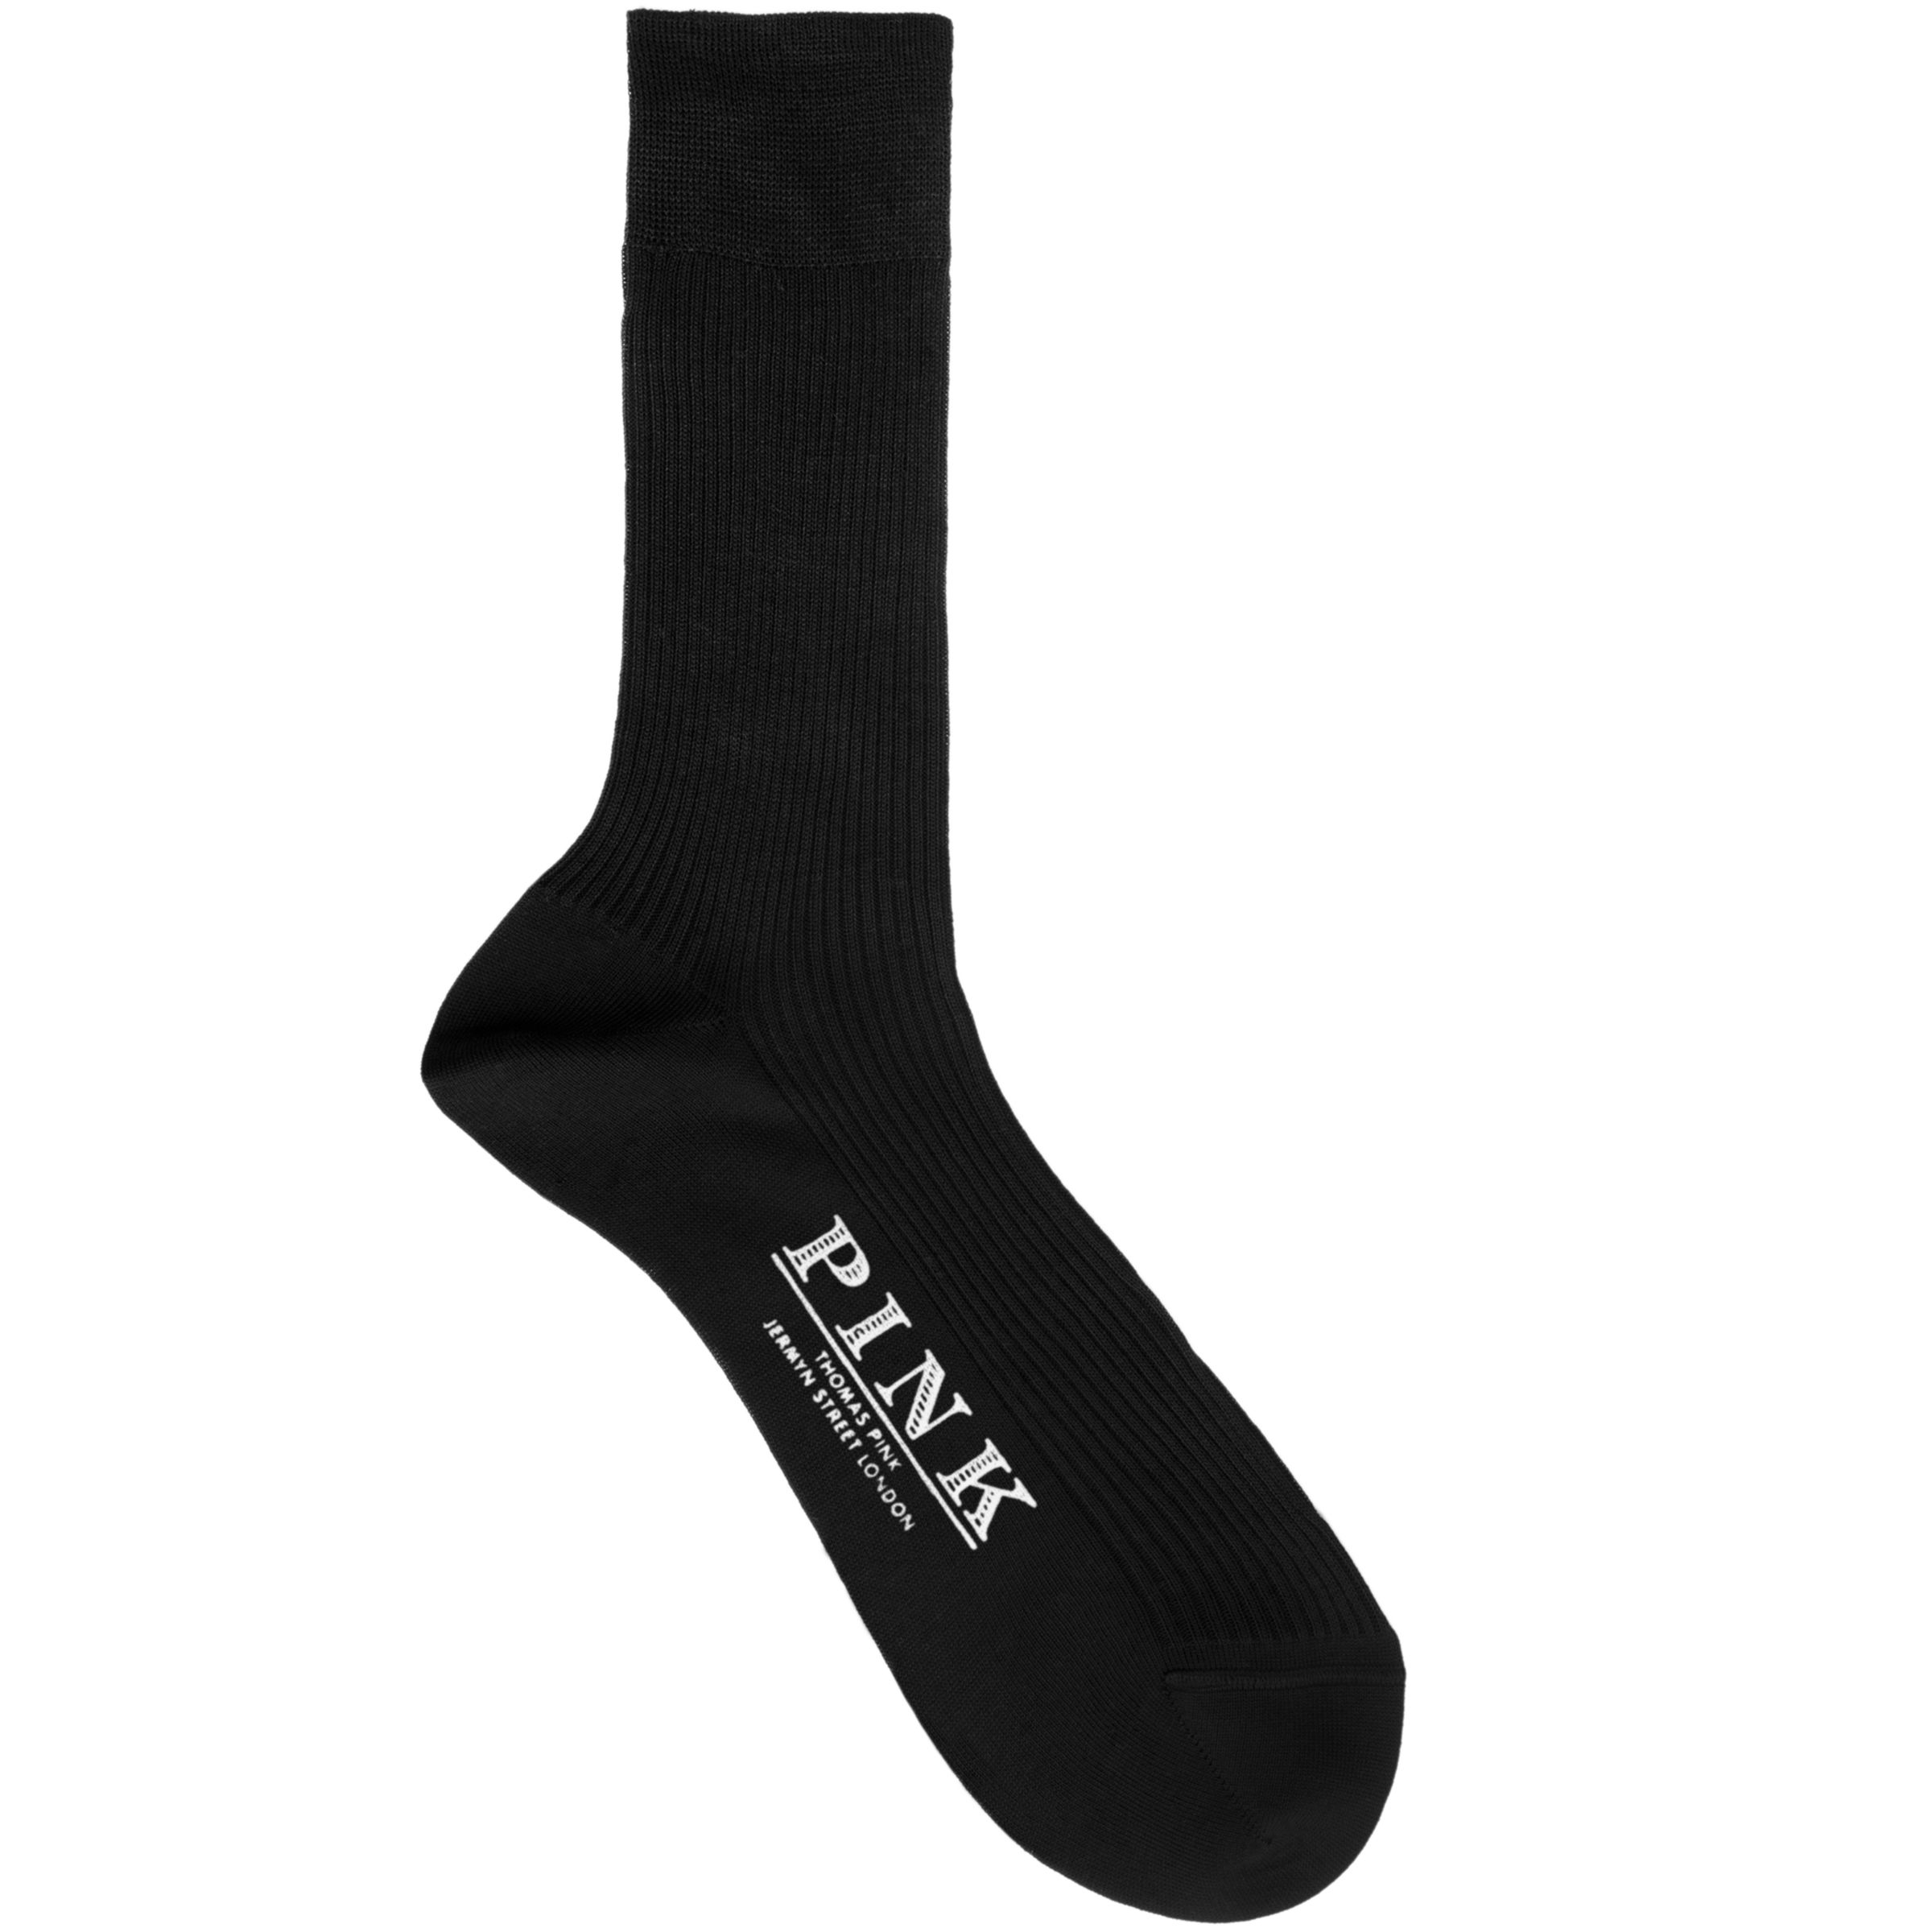 Thomas Pink Classic Cotton Socks, Black